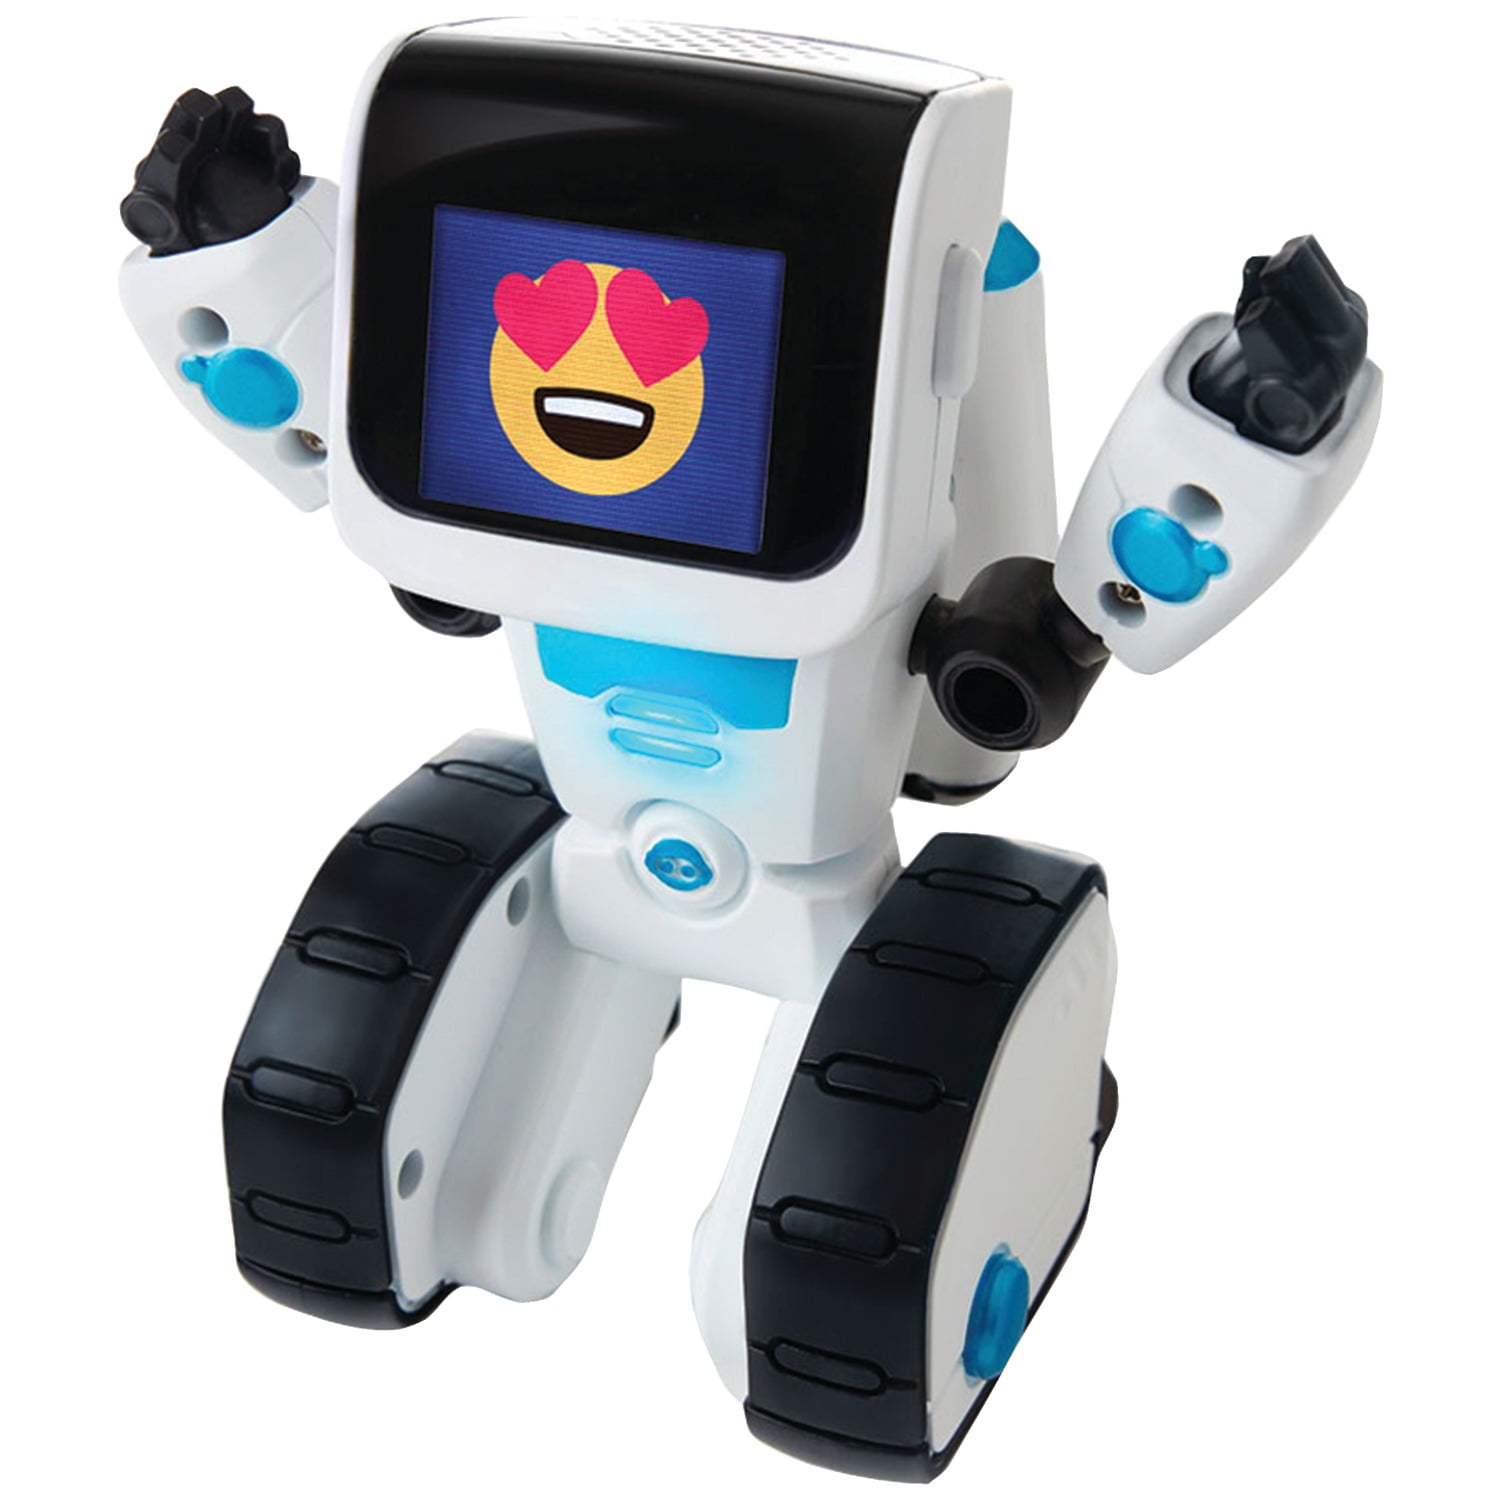 ELMOJI Junior Coding Robot COJI app + ELMOJI app New Unopened Box